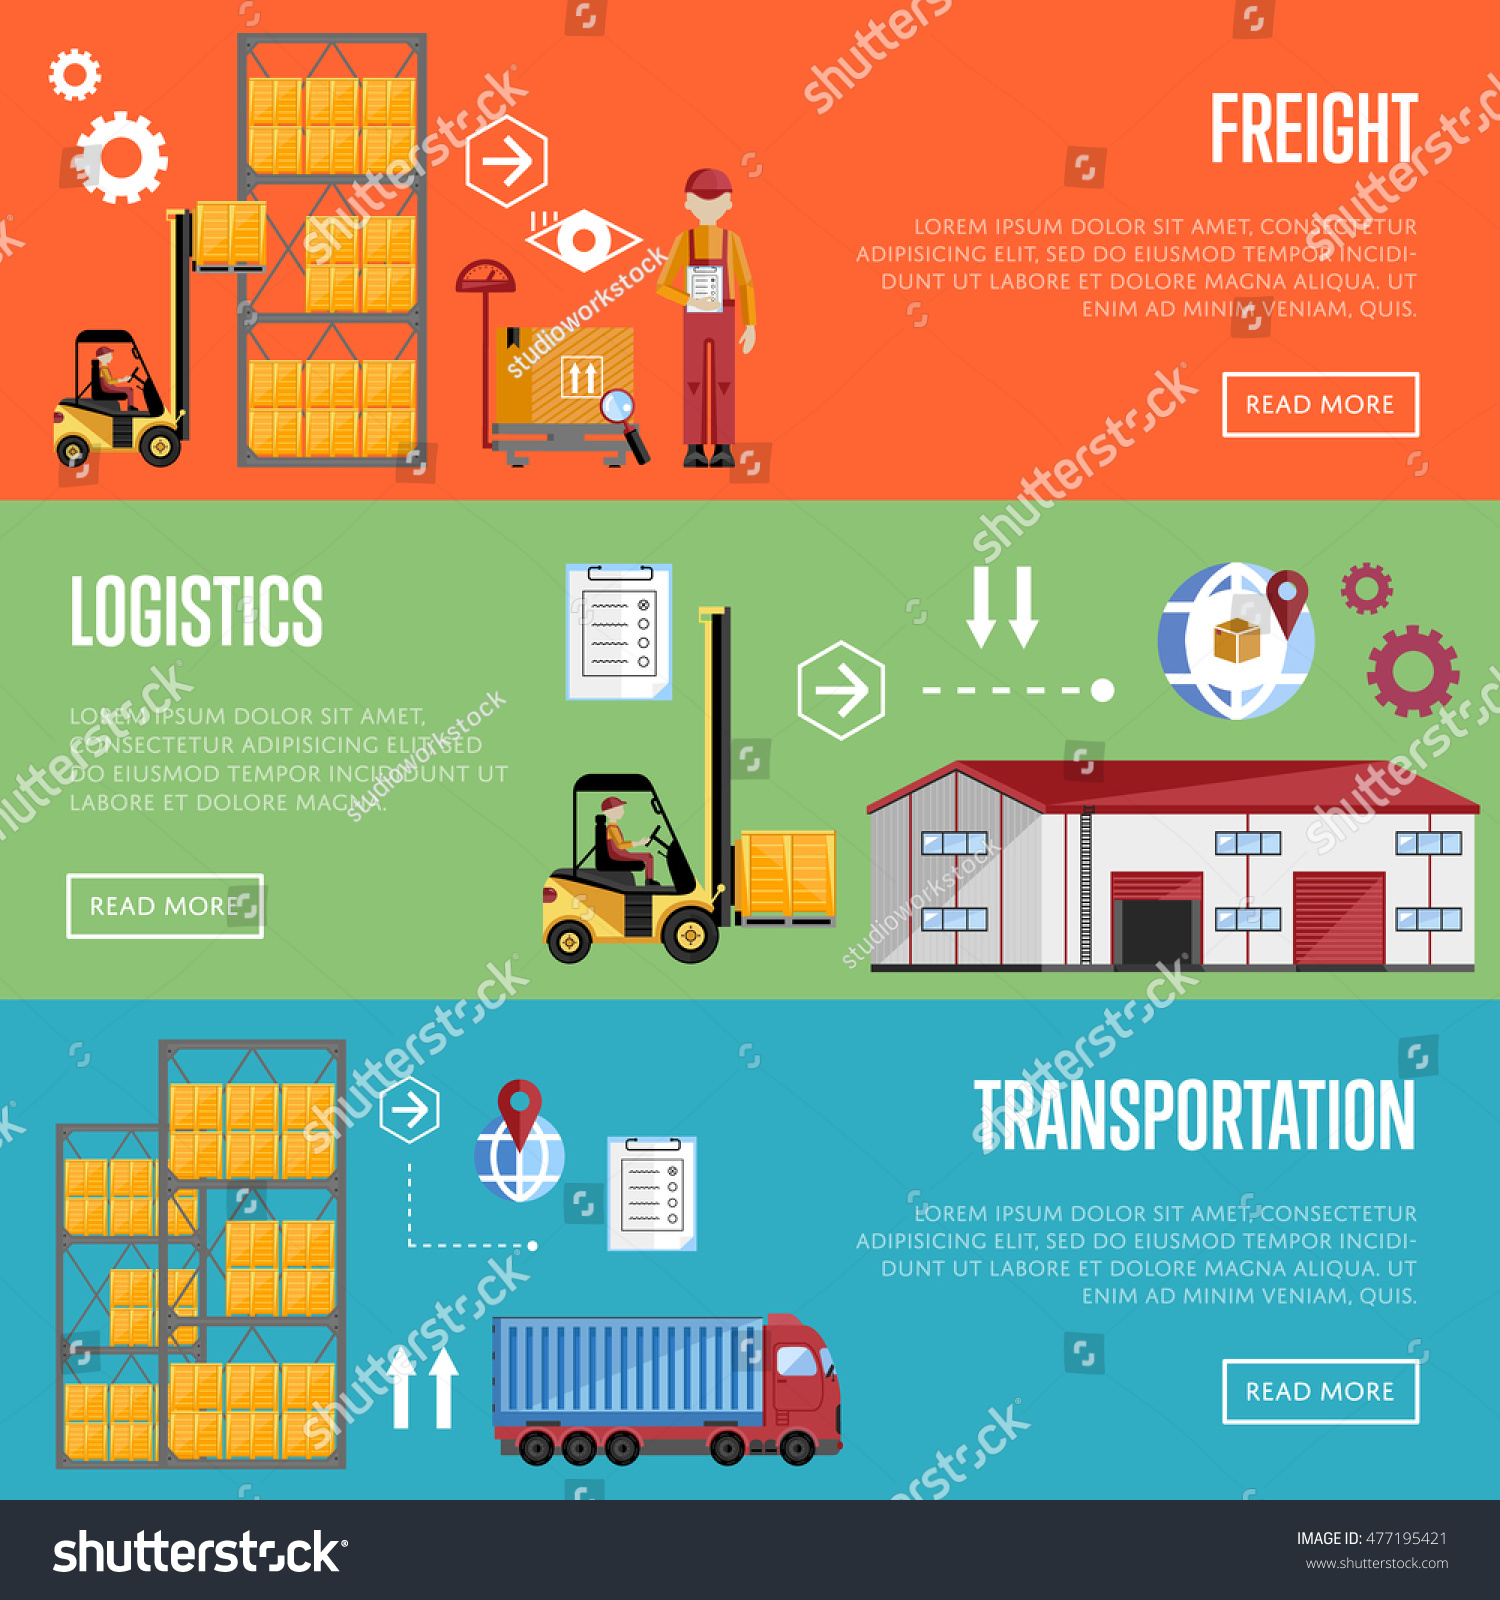 Logistics Concept Technology Via Supply Chain Stock Vector (Royalty ...